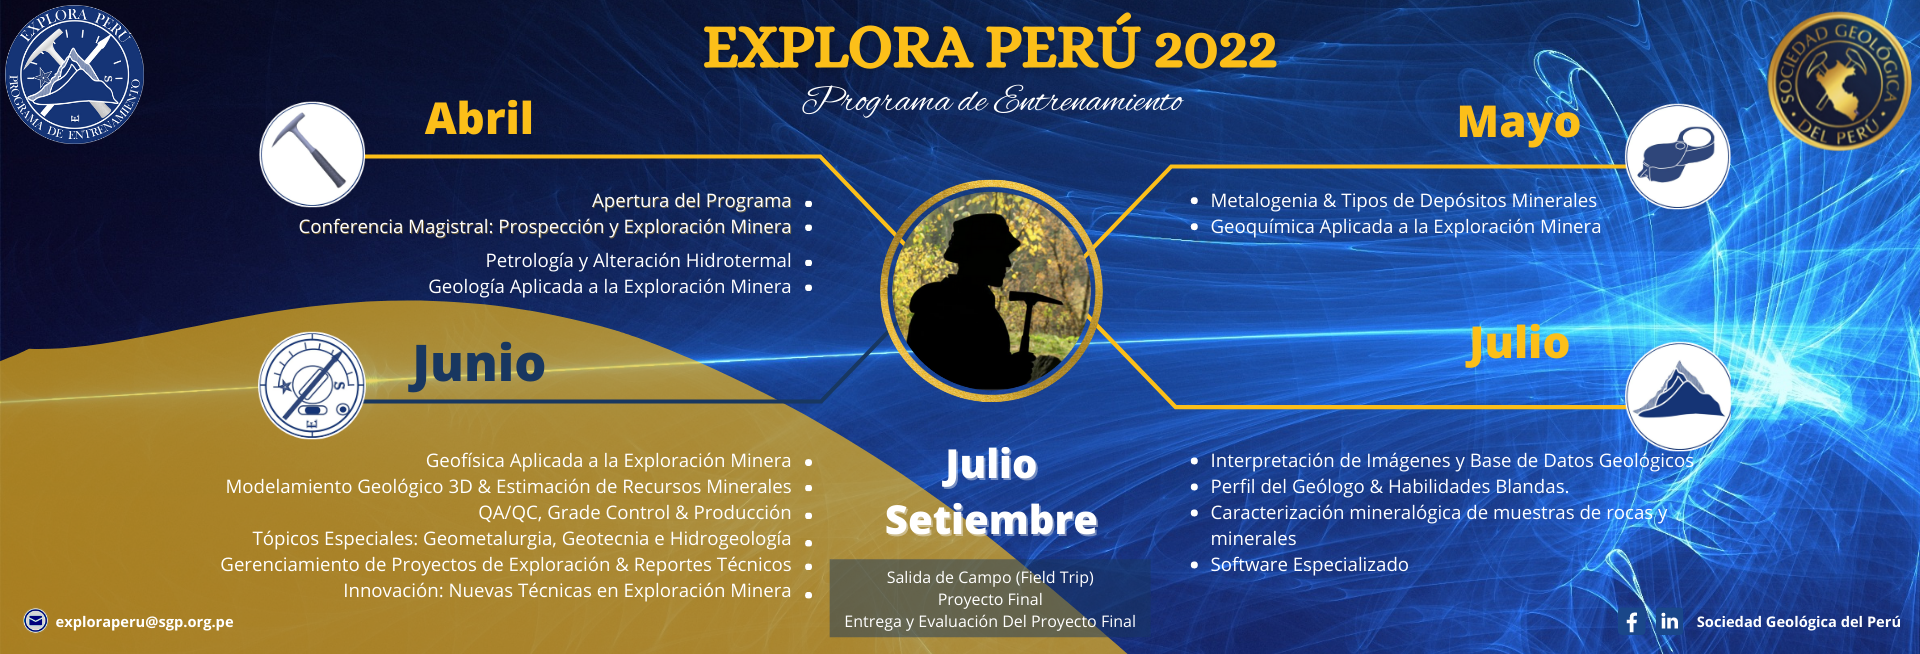 2_Explora Peru 2022_Contenido